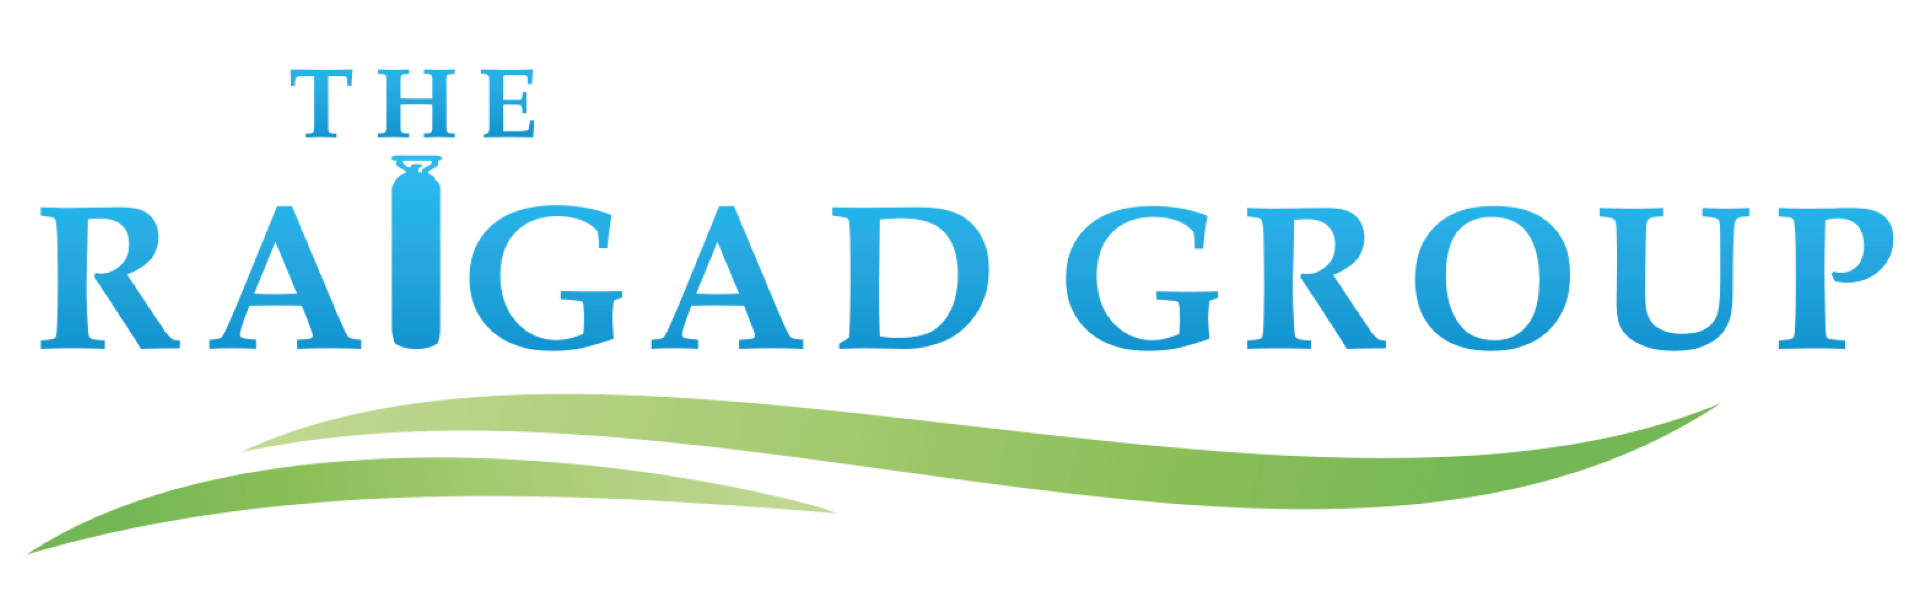 Raigad-group-logo